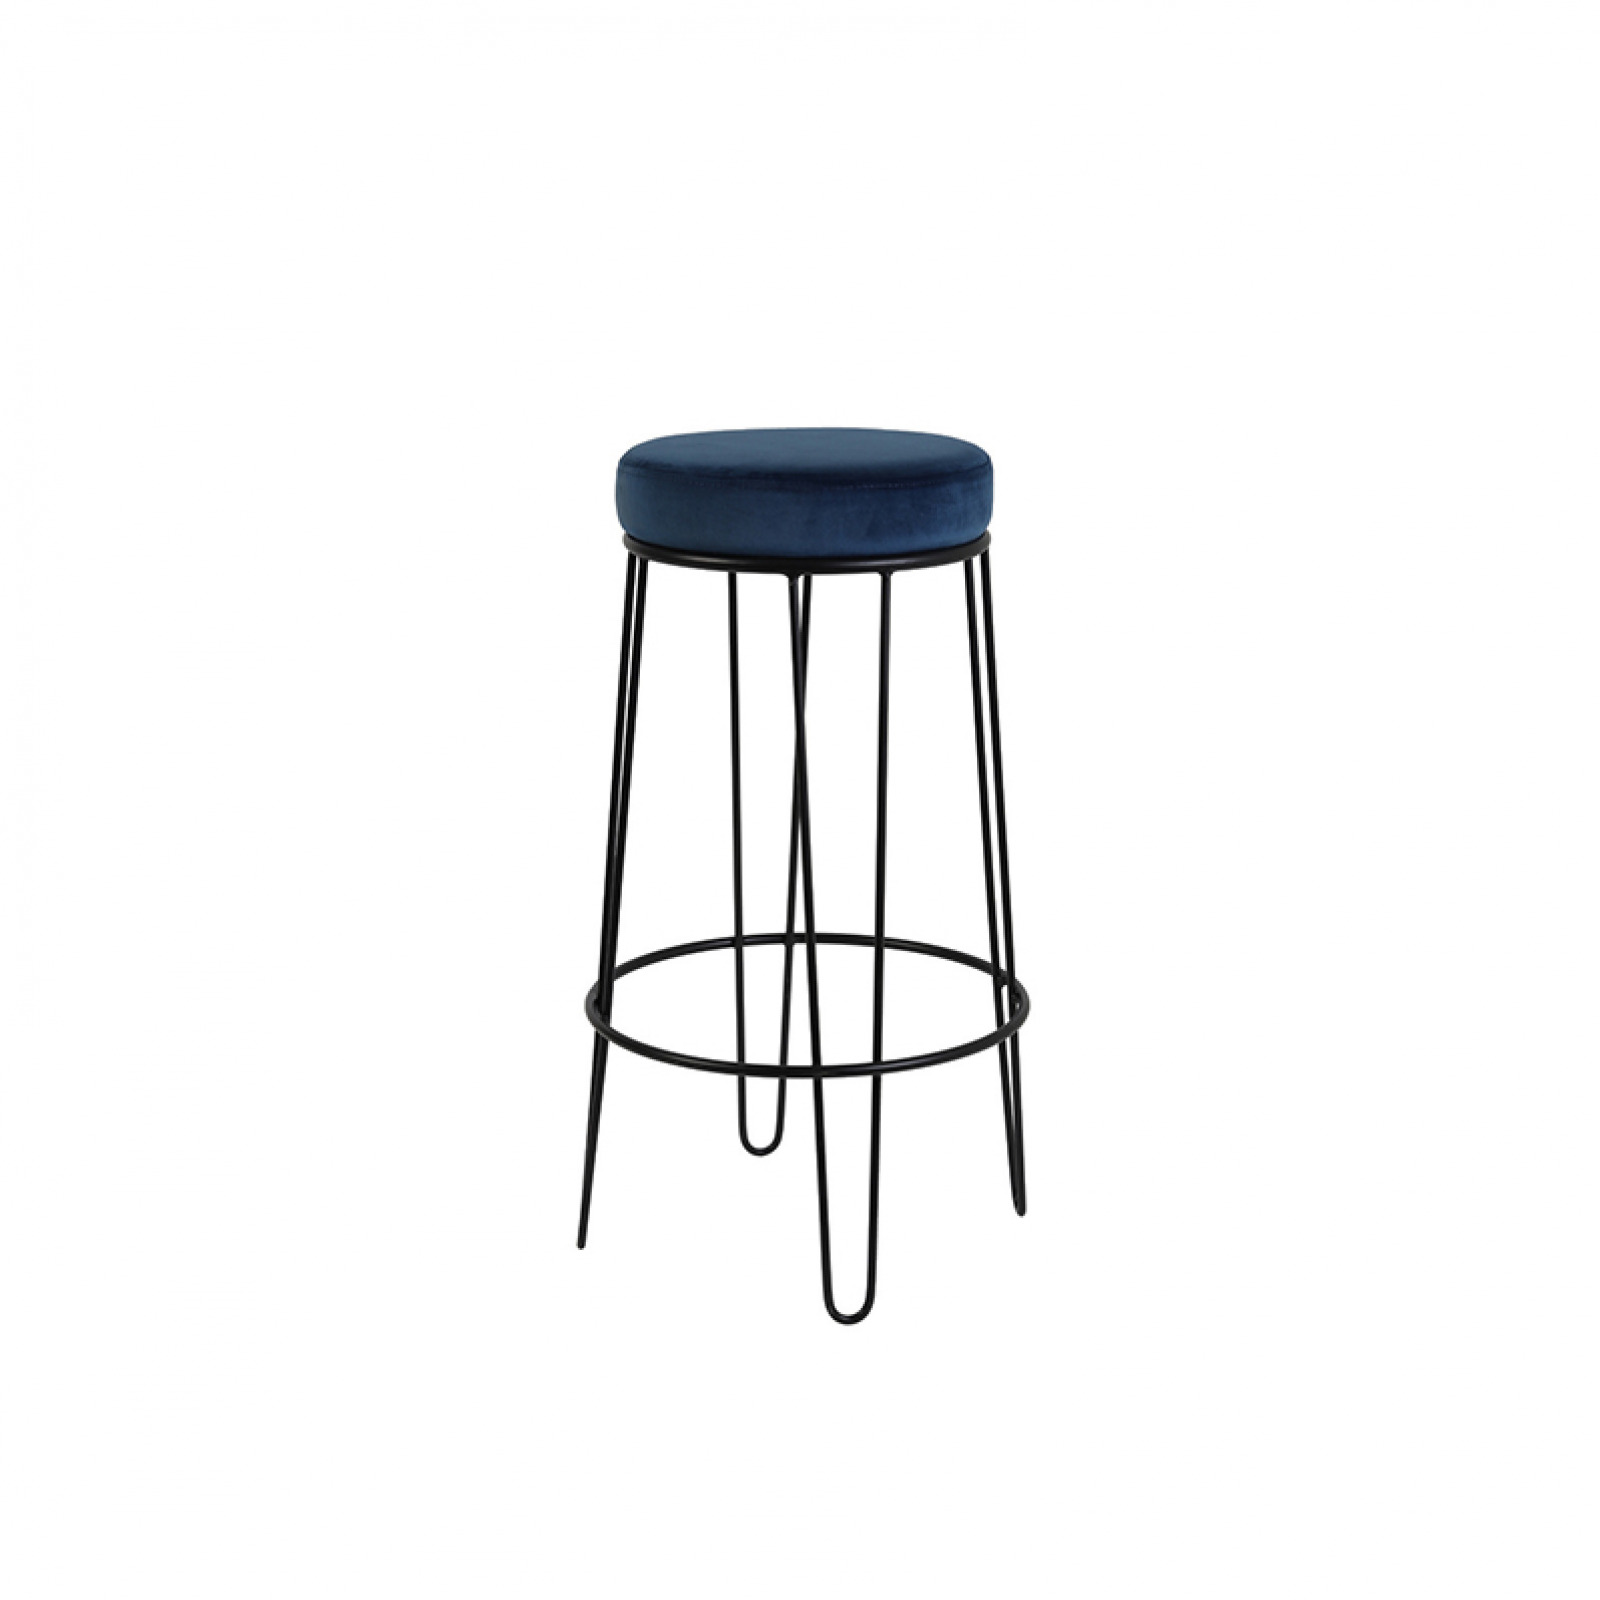 Alice blue bar stool